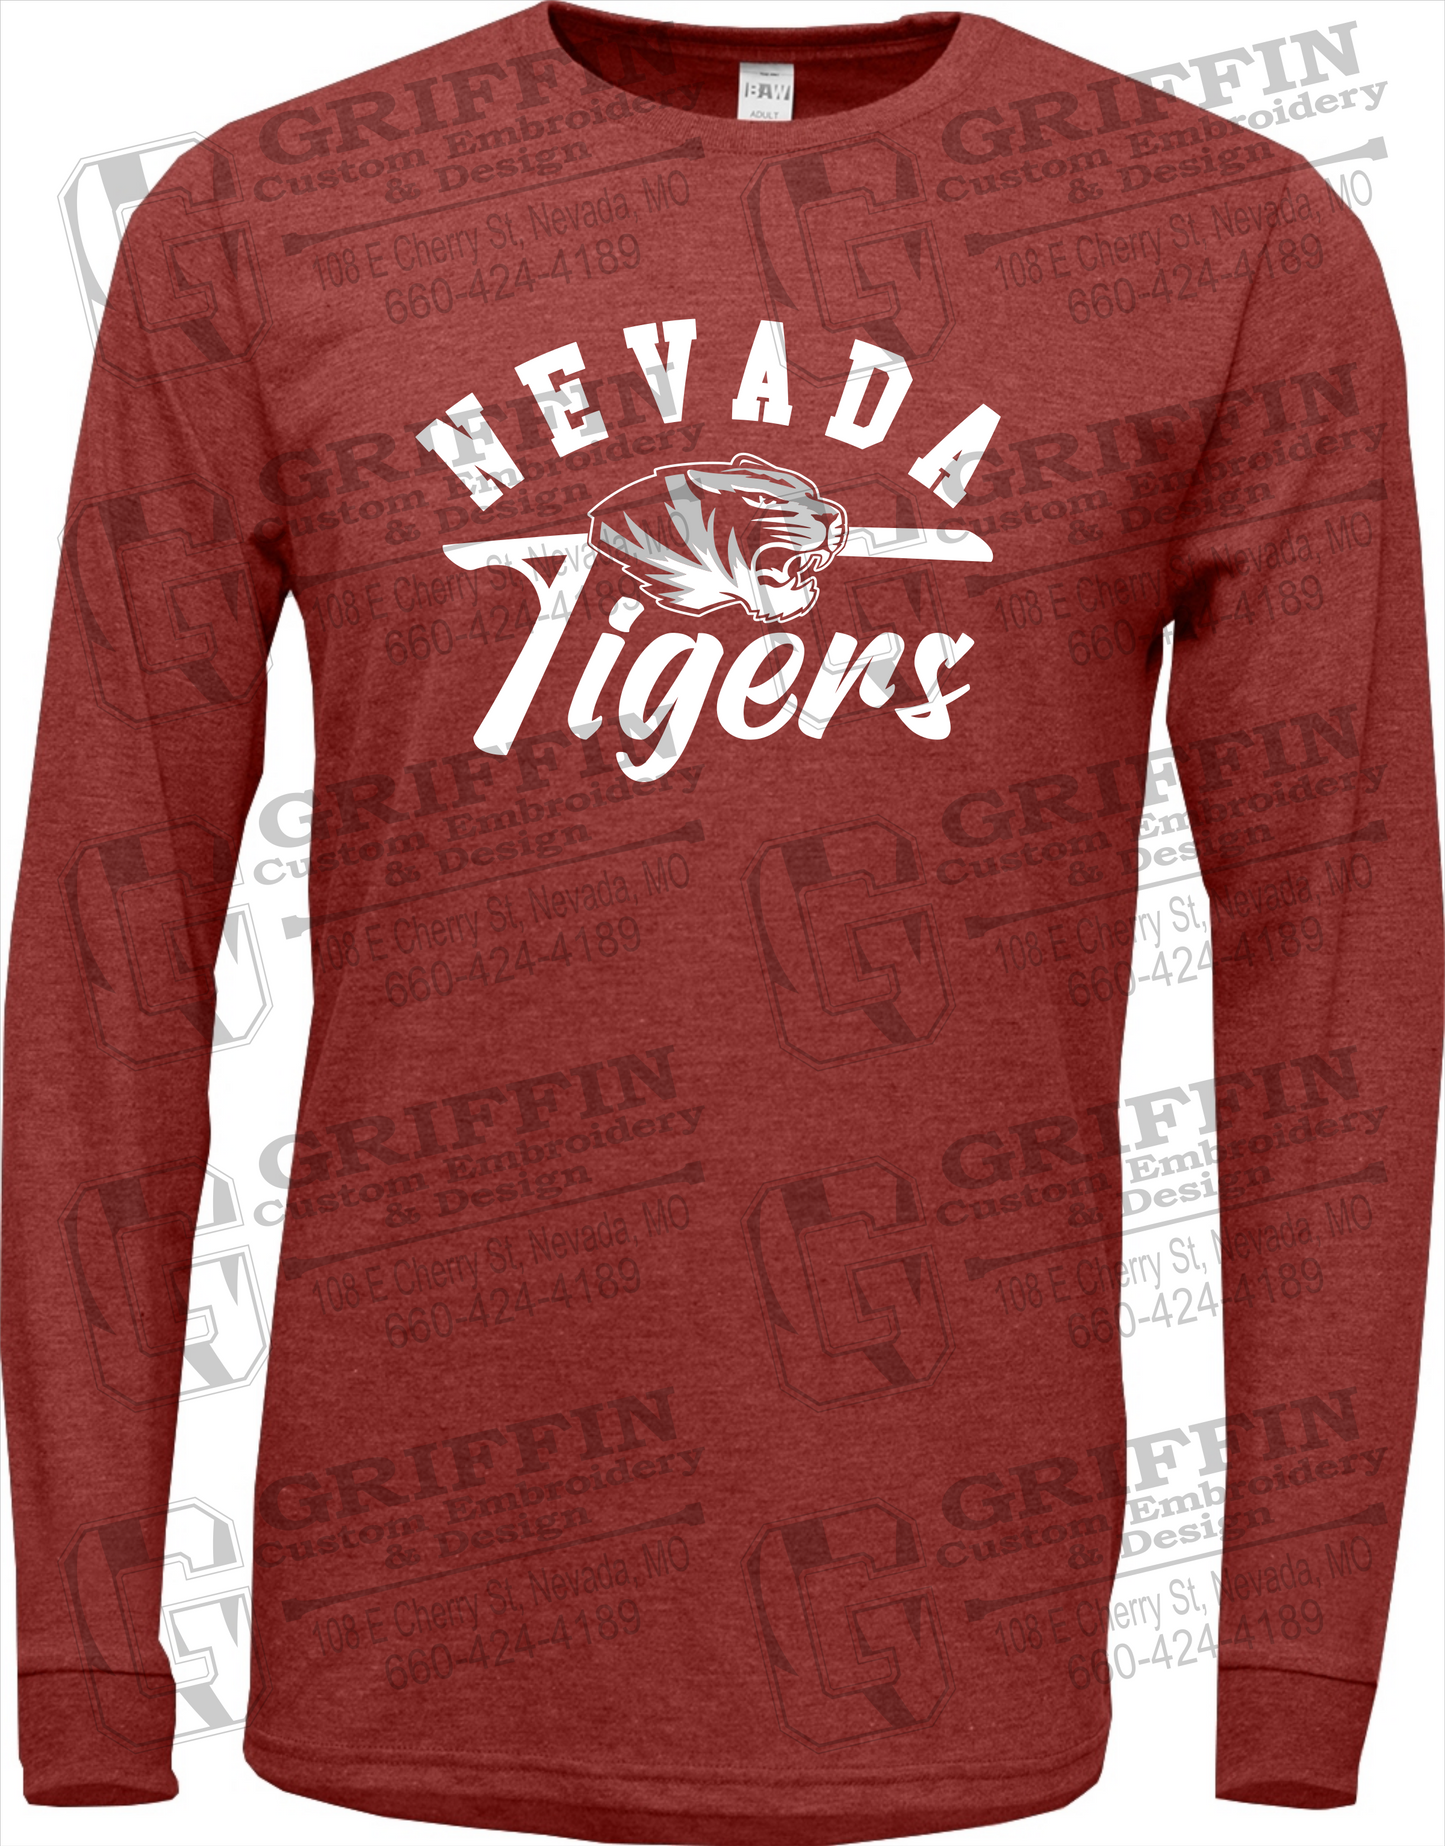 Nevada Tigers 20-Z Long Sleeve T-Shirt